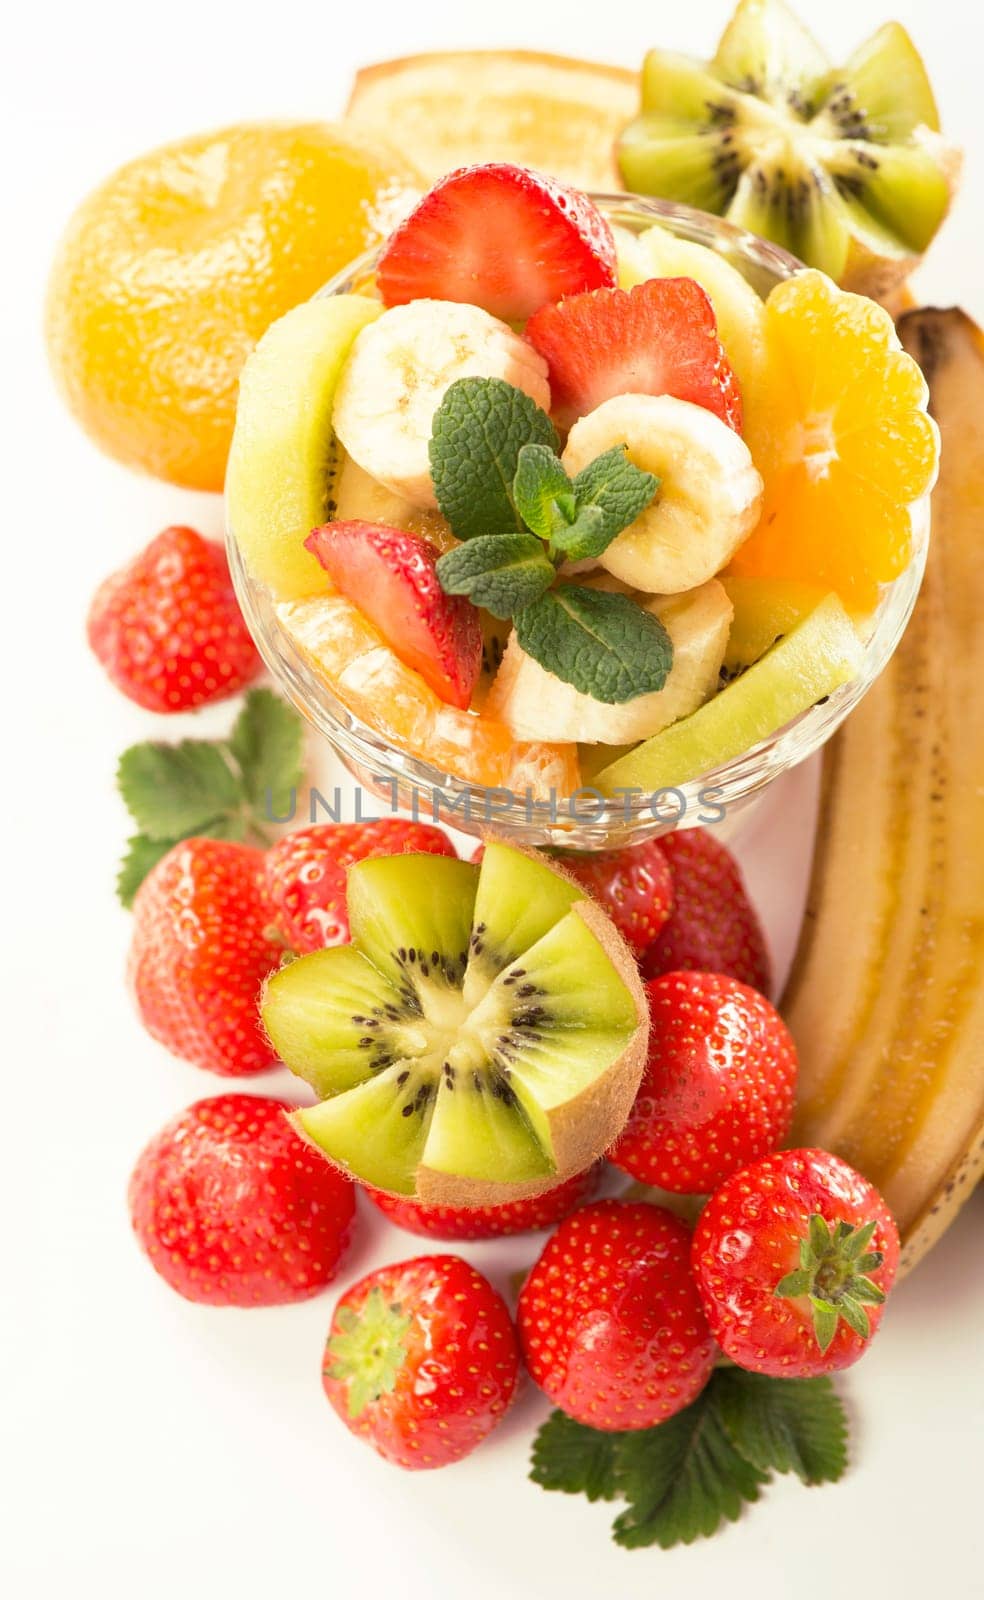 Bananas, kiwi and strawberry and glass bowl with fresh fruits salad close up